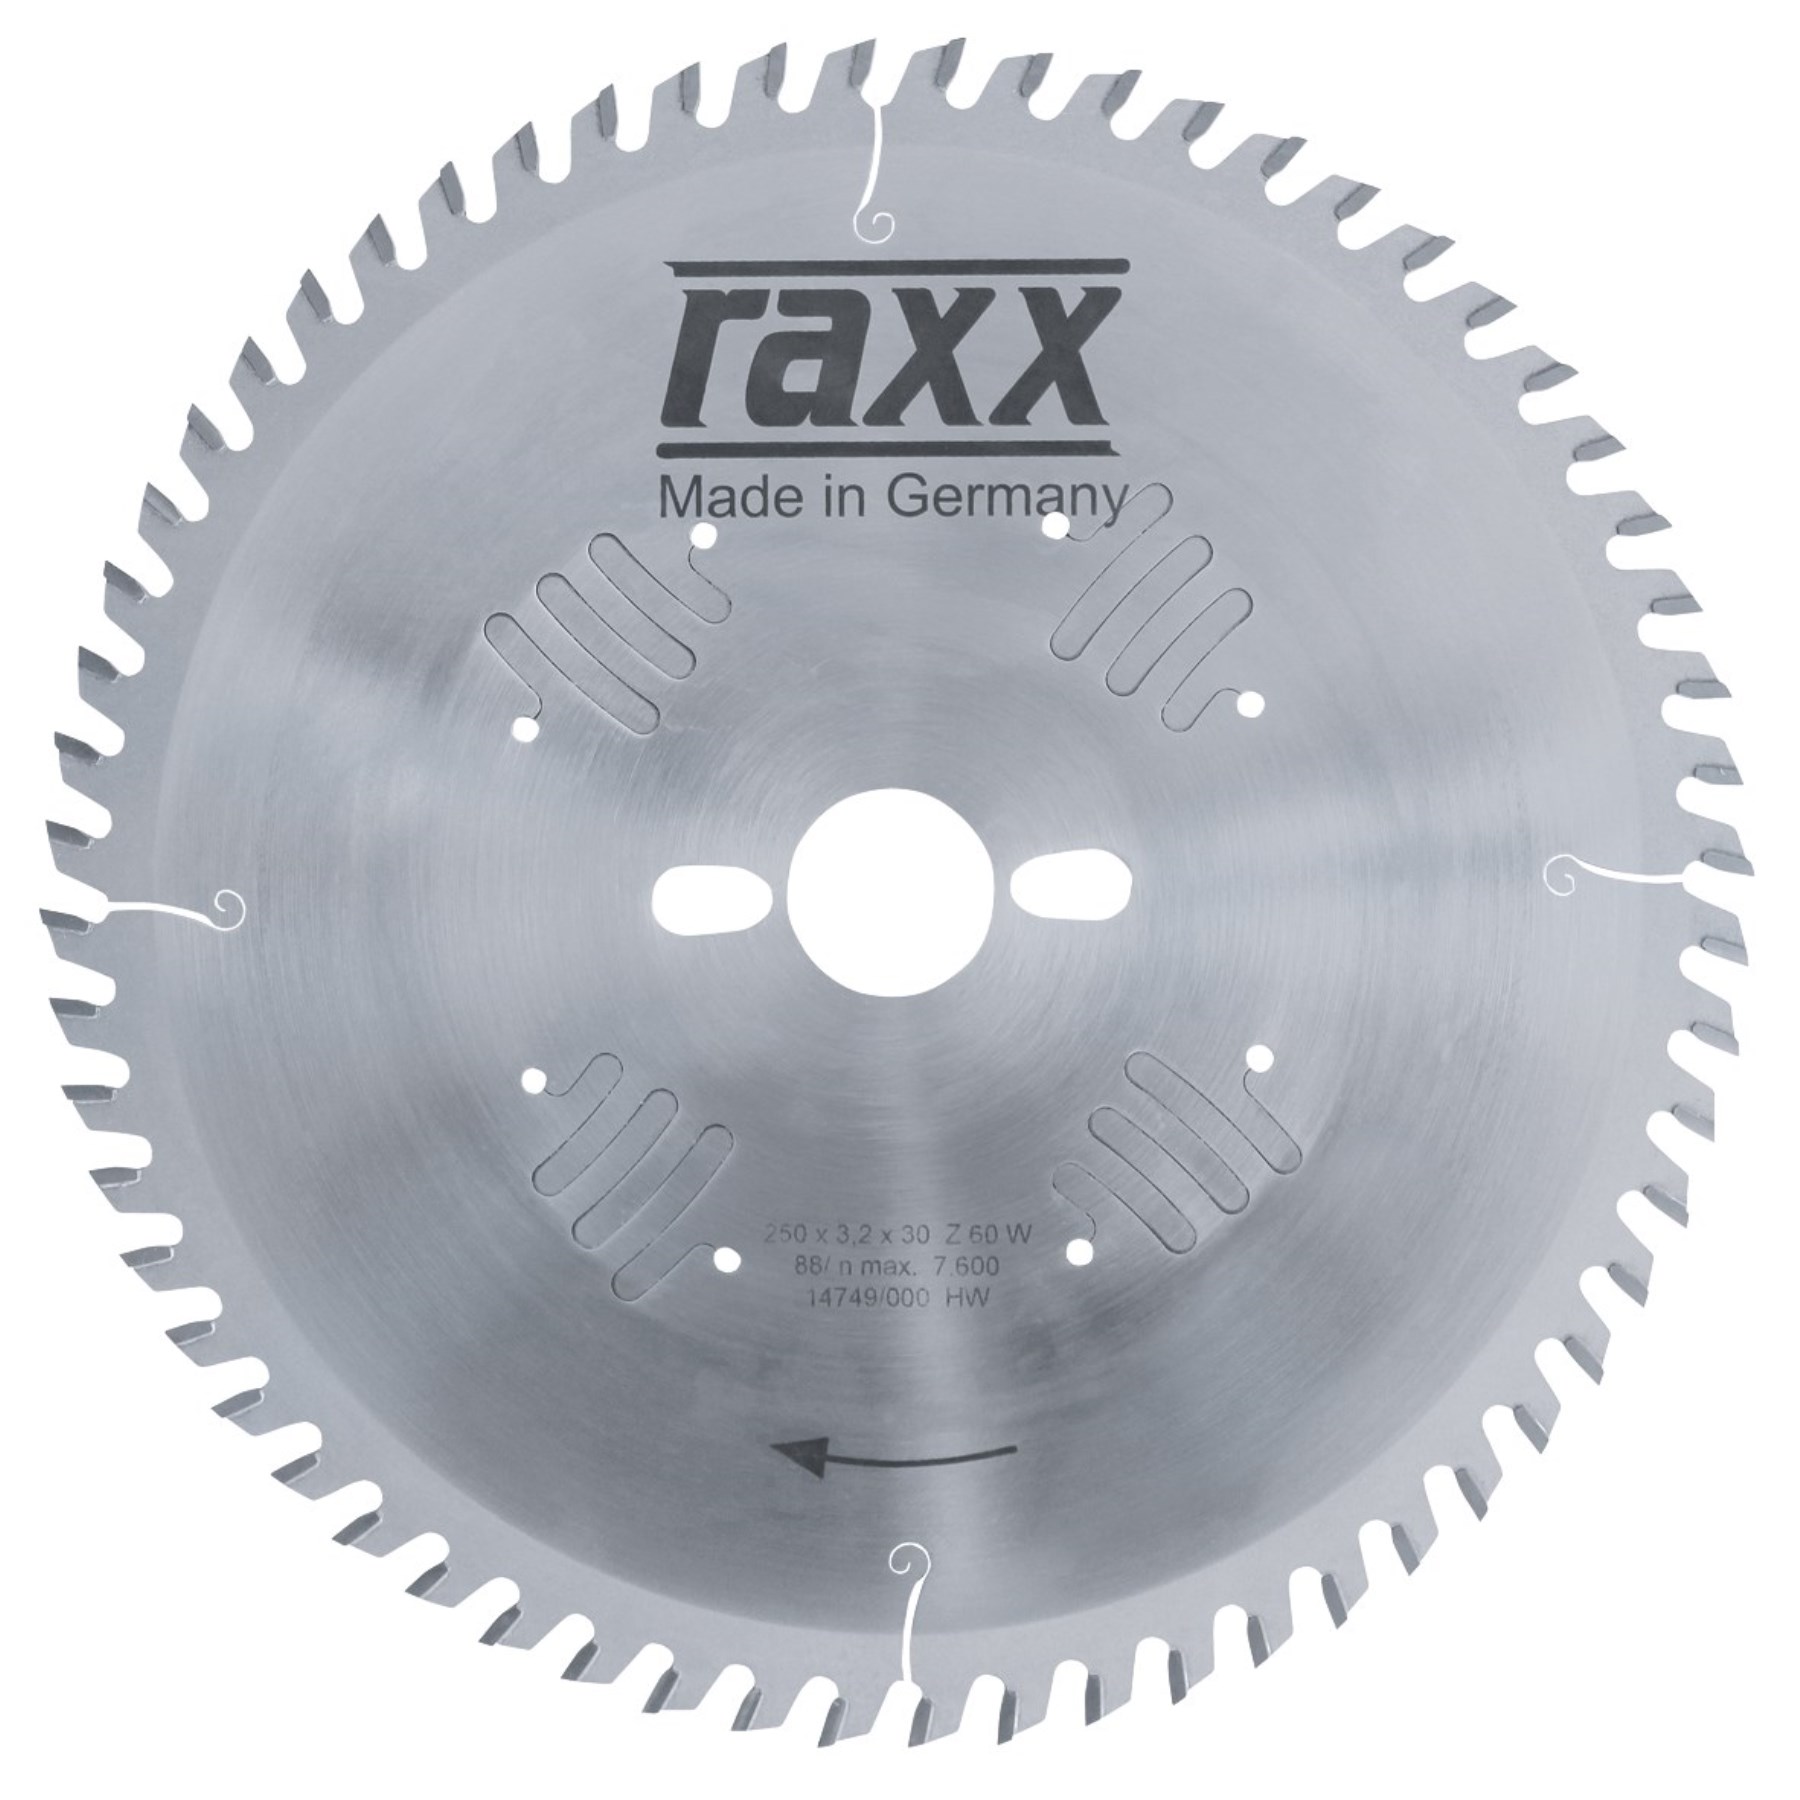 RAXX 1205068 kotouč k okružní pile HM 250x3,2x30 [ 55250300600060400 ]